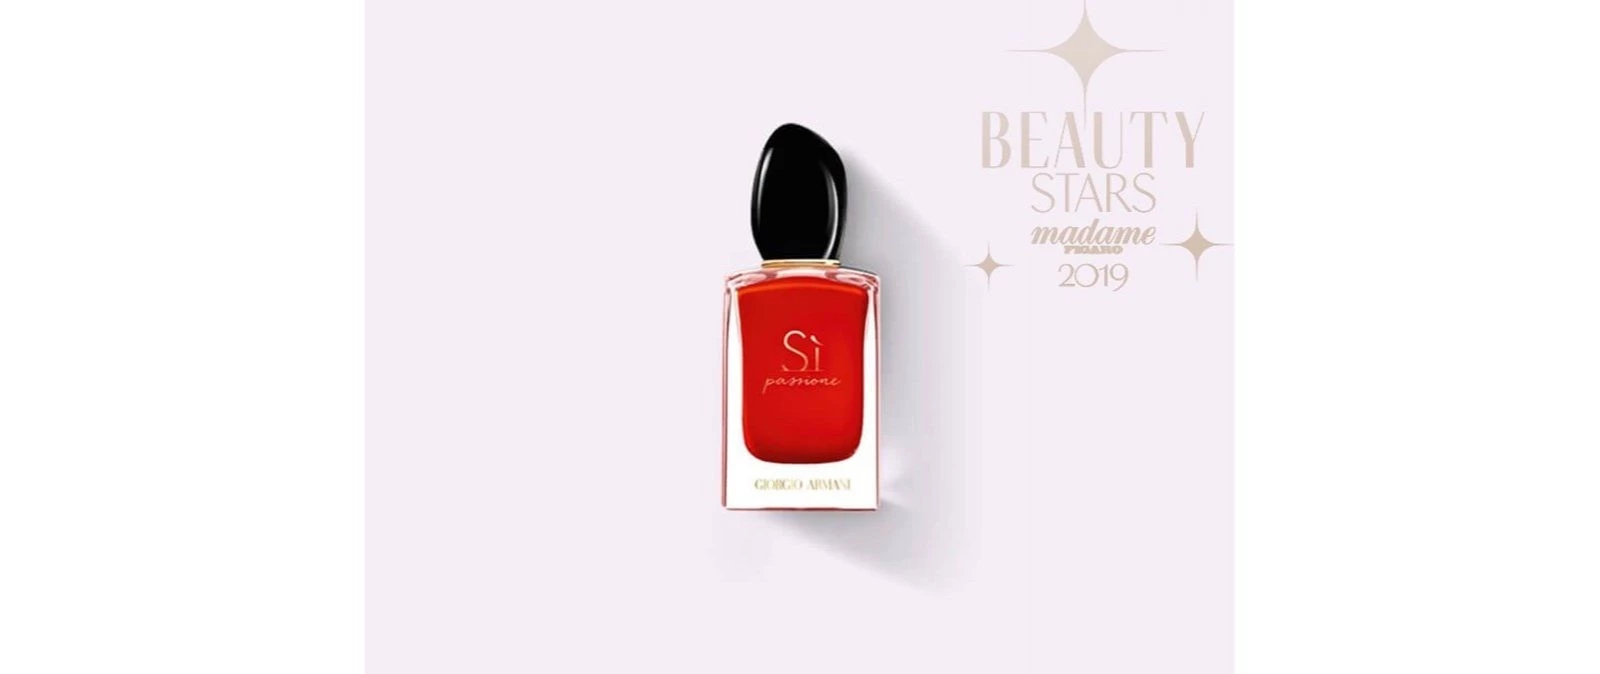 Beauty Stars by Madame Figaro: Νικητής στην κατηγορία “Women’s Perfume” αναδείχτηκε…